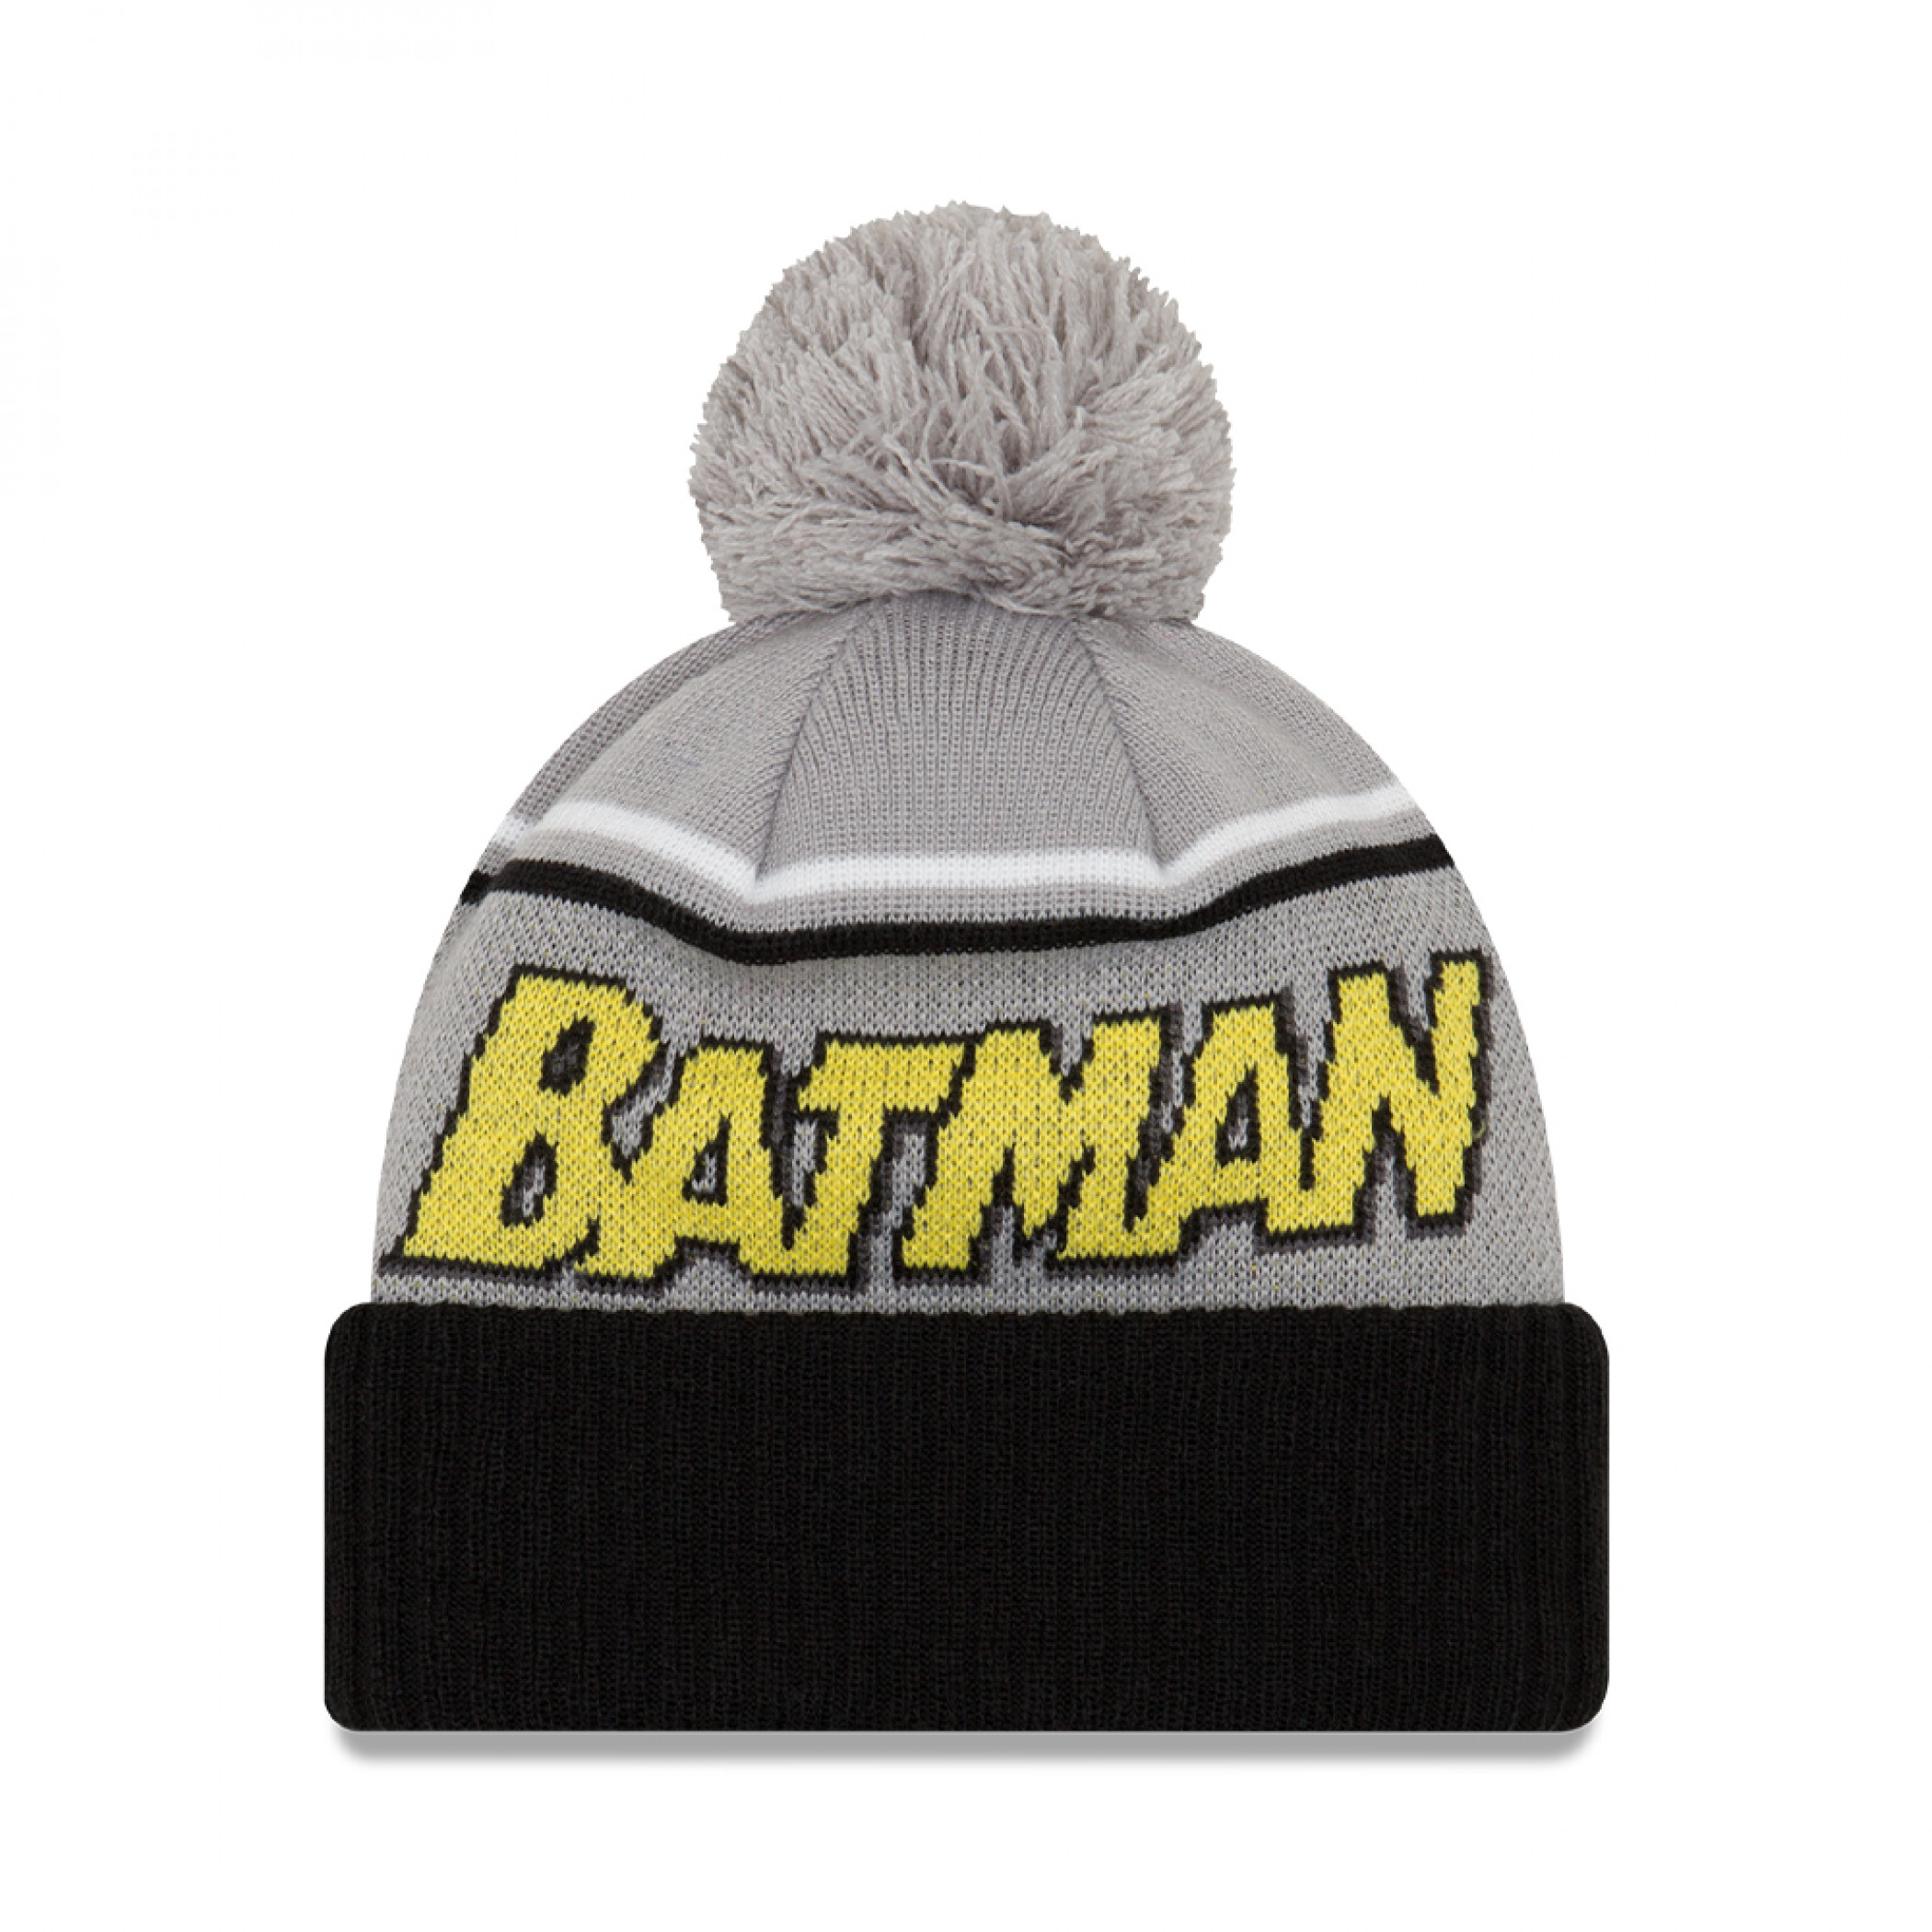 DC Comics Batman Classic Bat Symbol New Era Patch Pom Knit Beanie